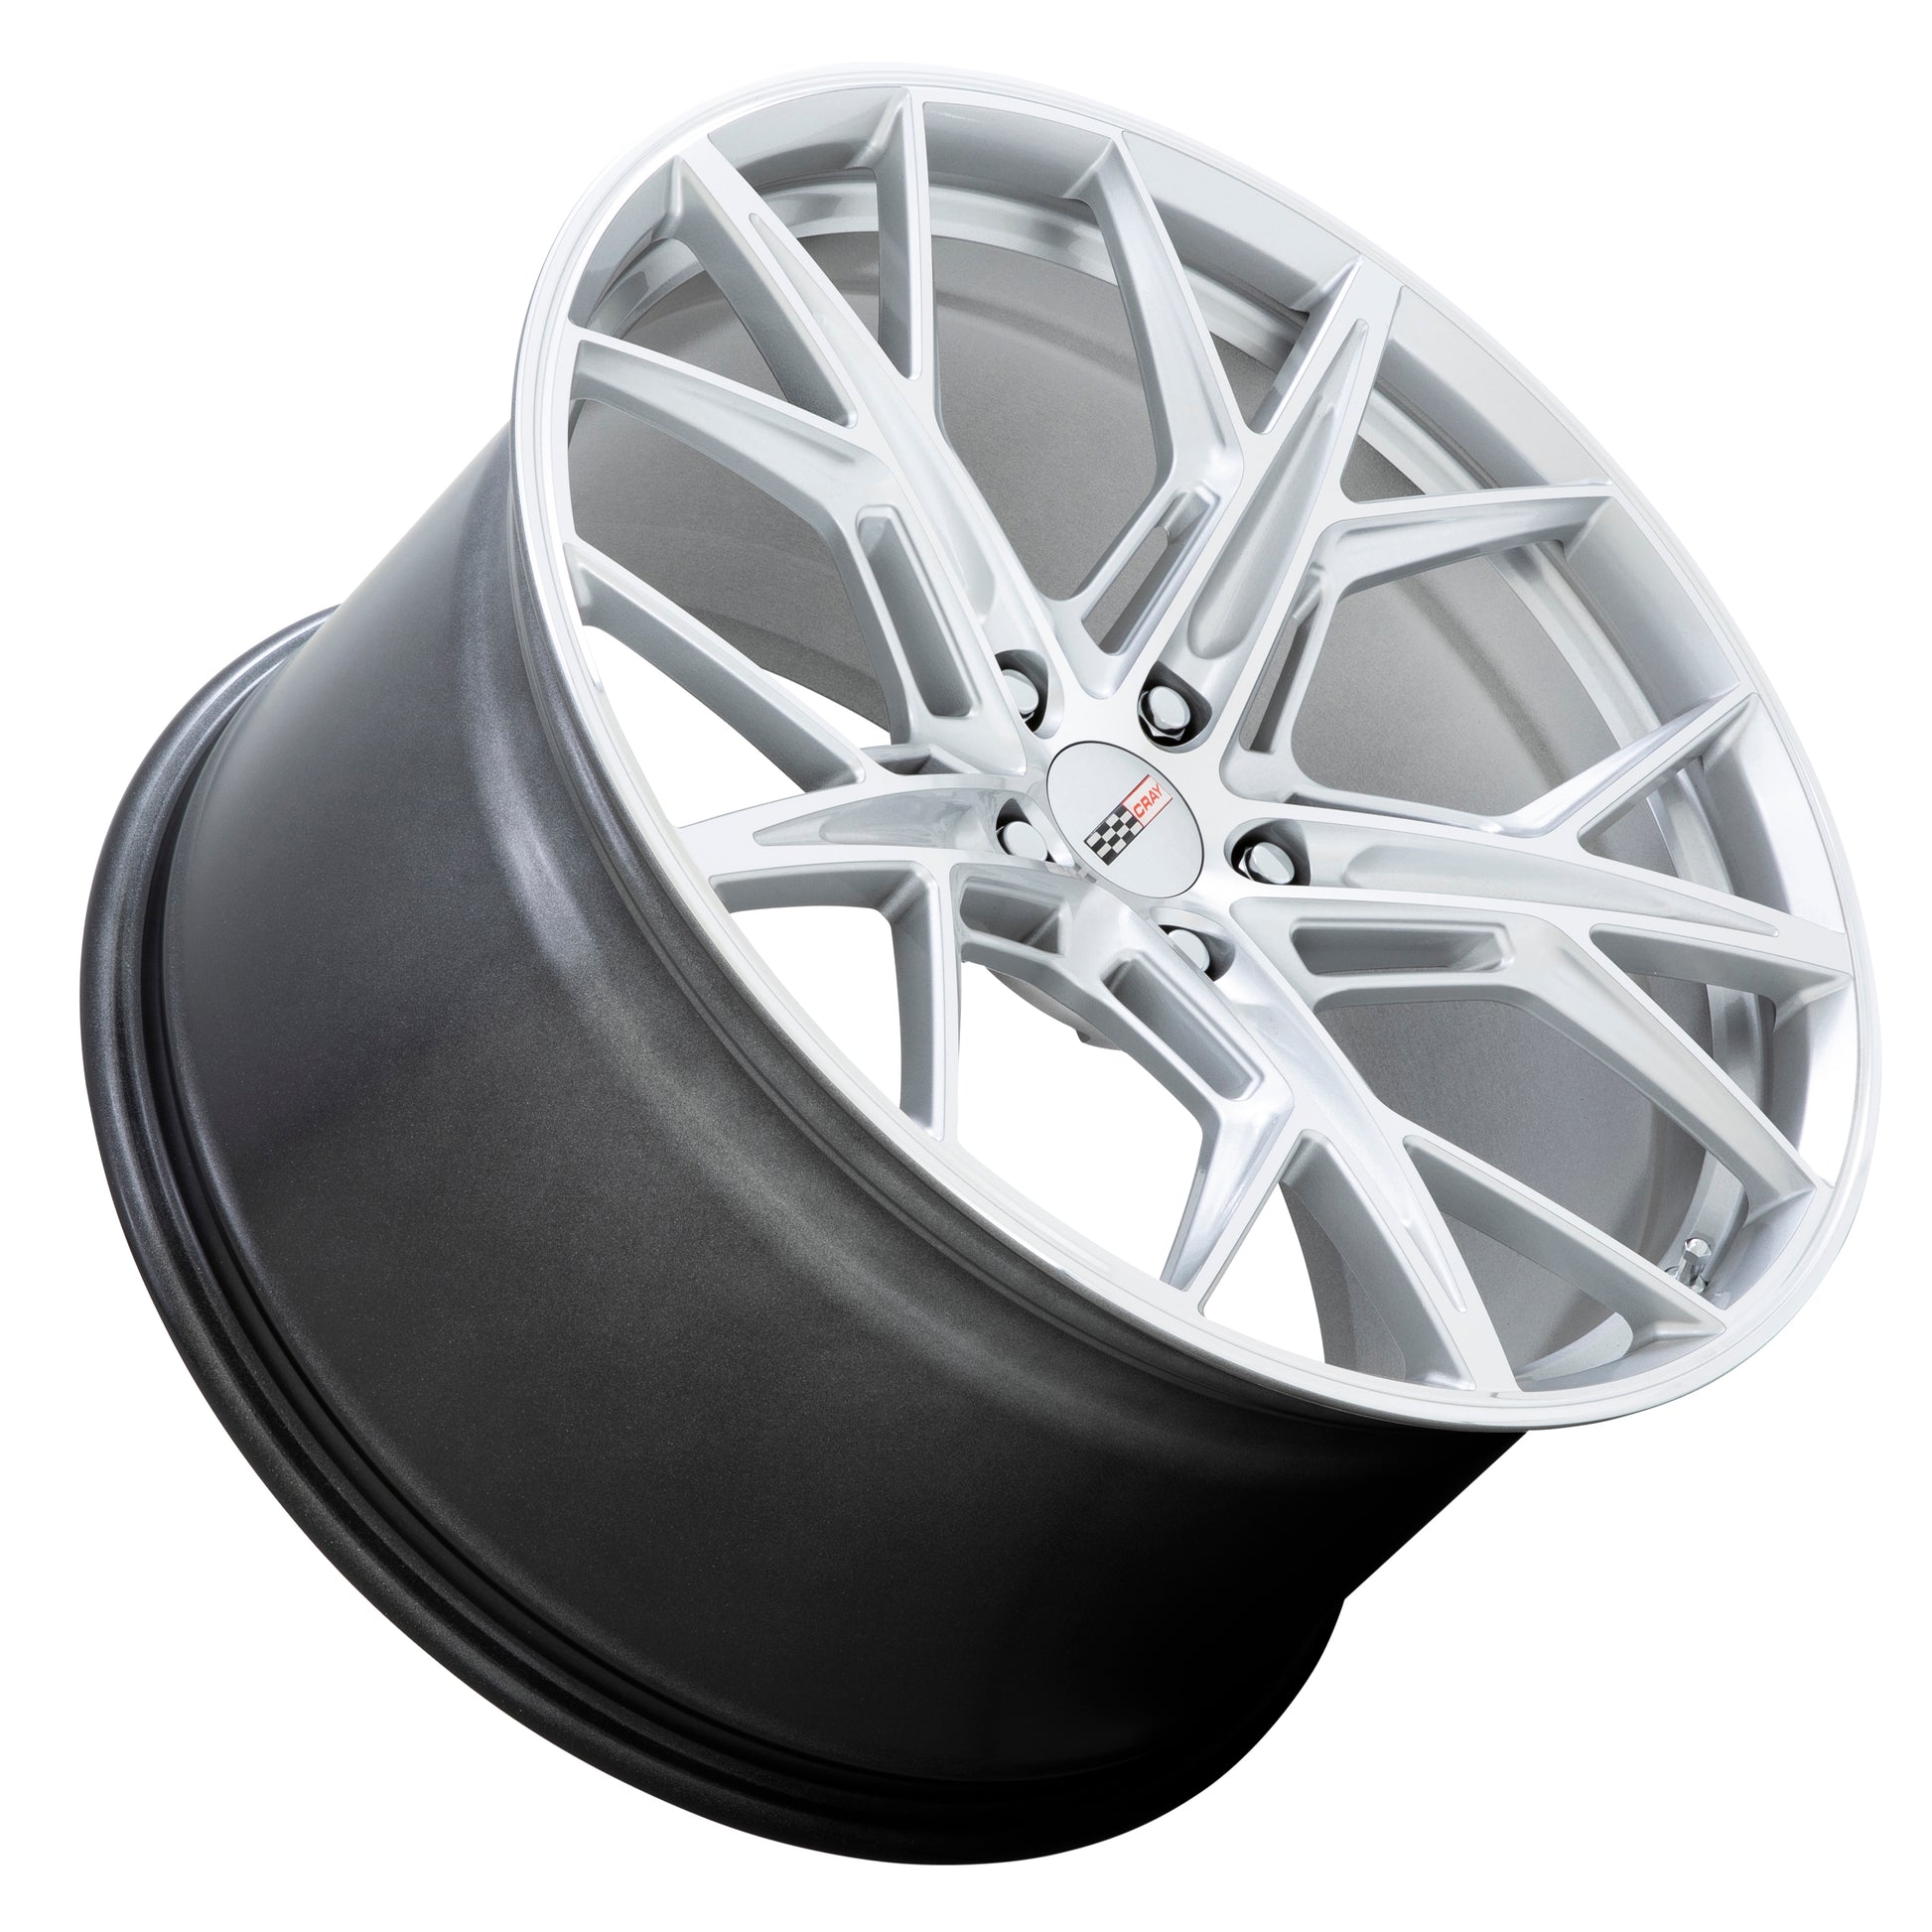 C8 Corvette Wheels: Cray Hammerhead - Gloss Silver w/ Mirror Cut Face